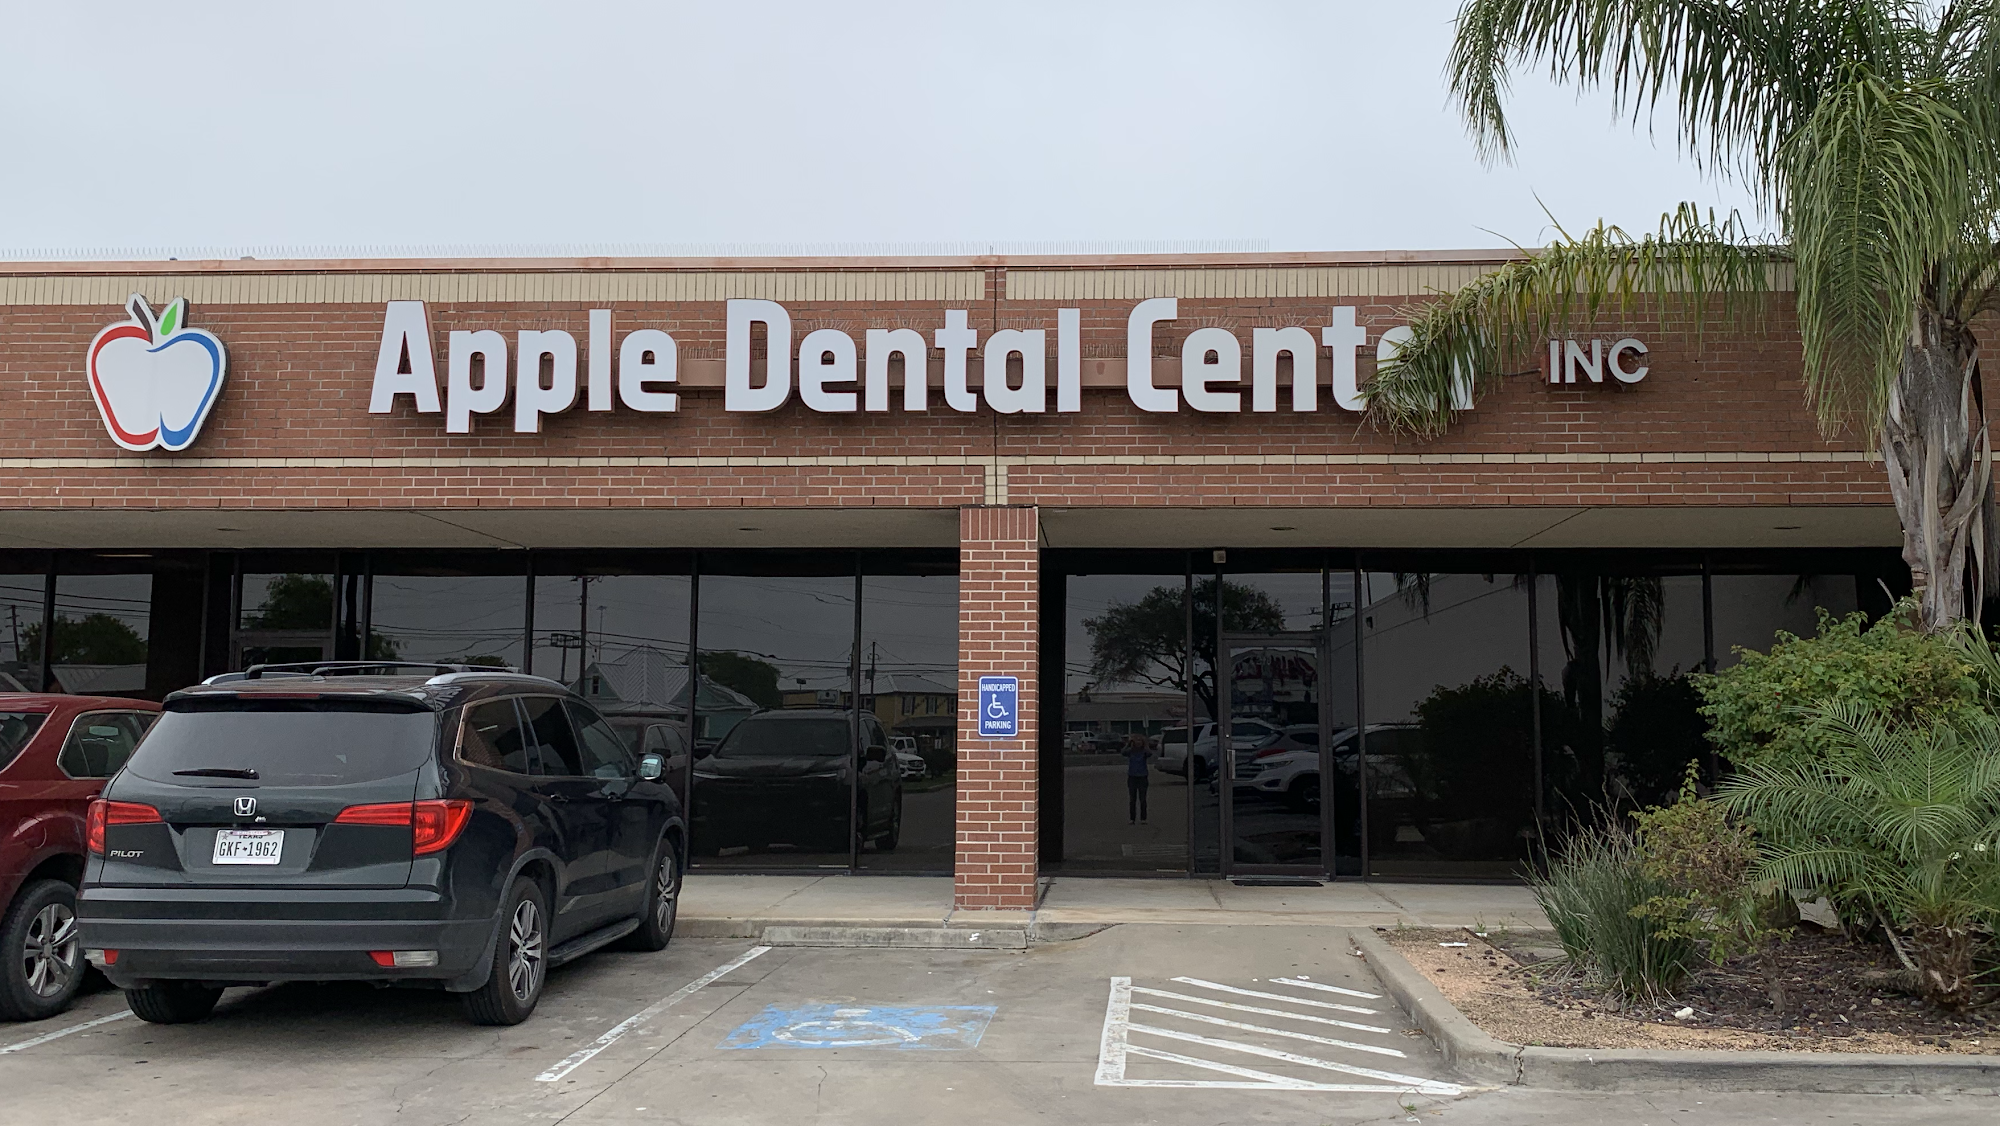 Apple Dental Center Inc